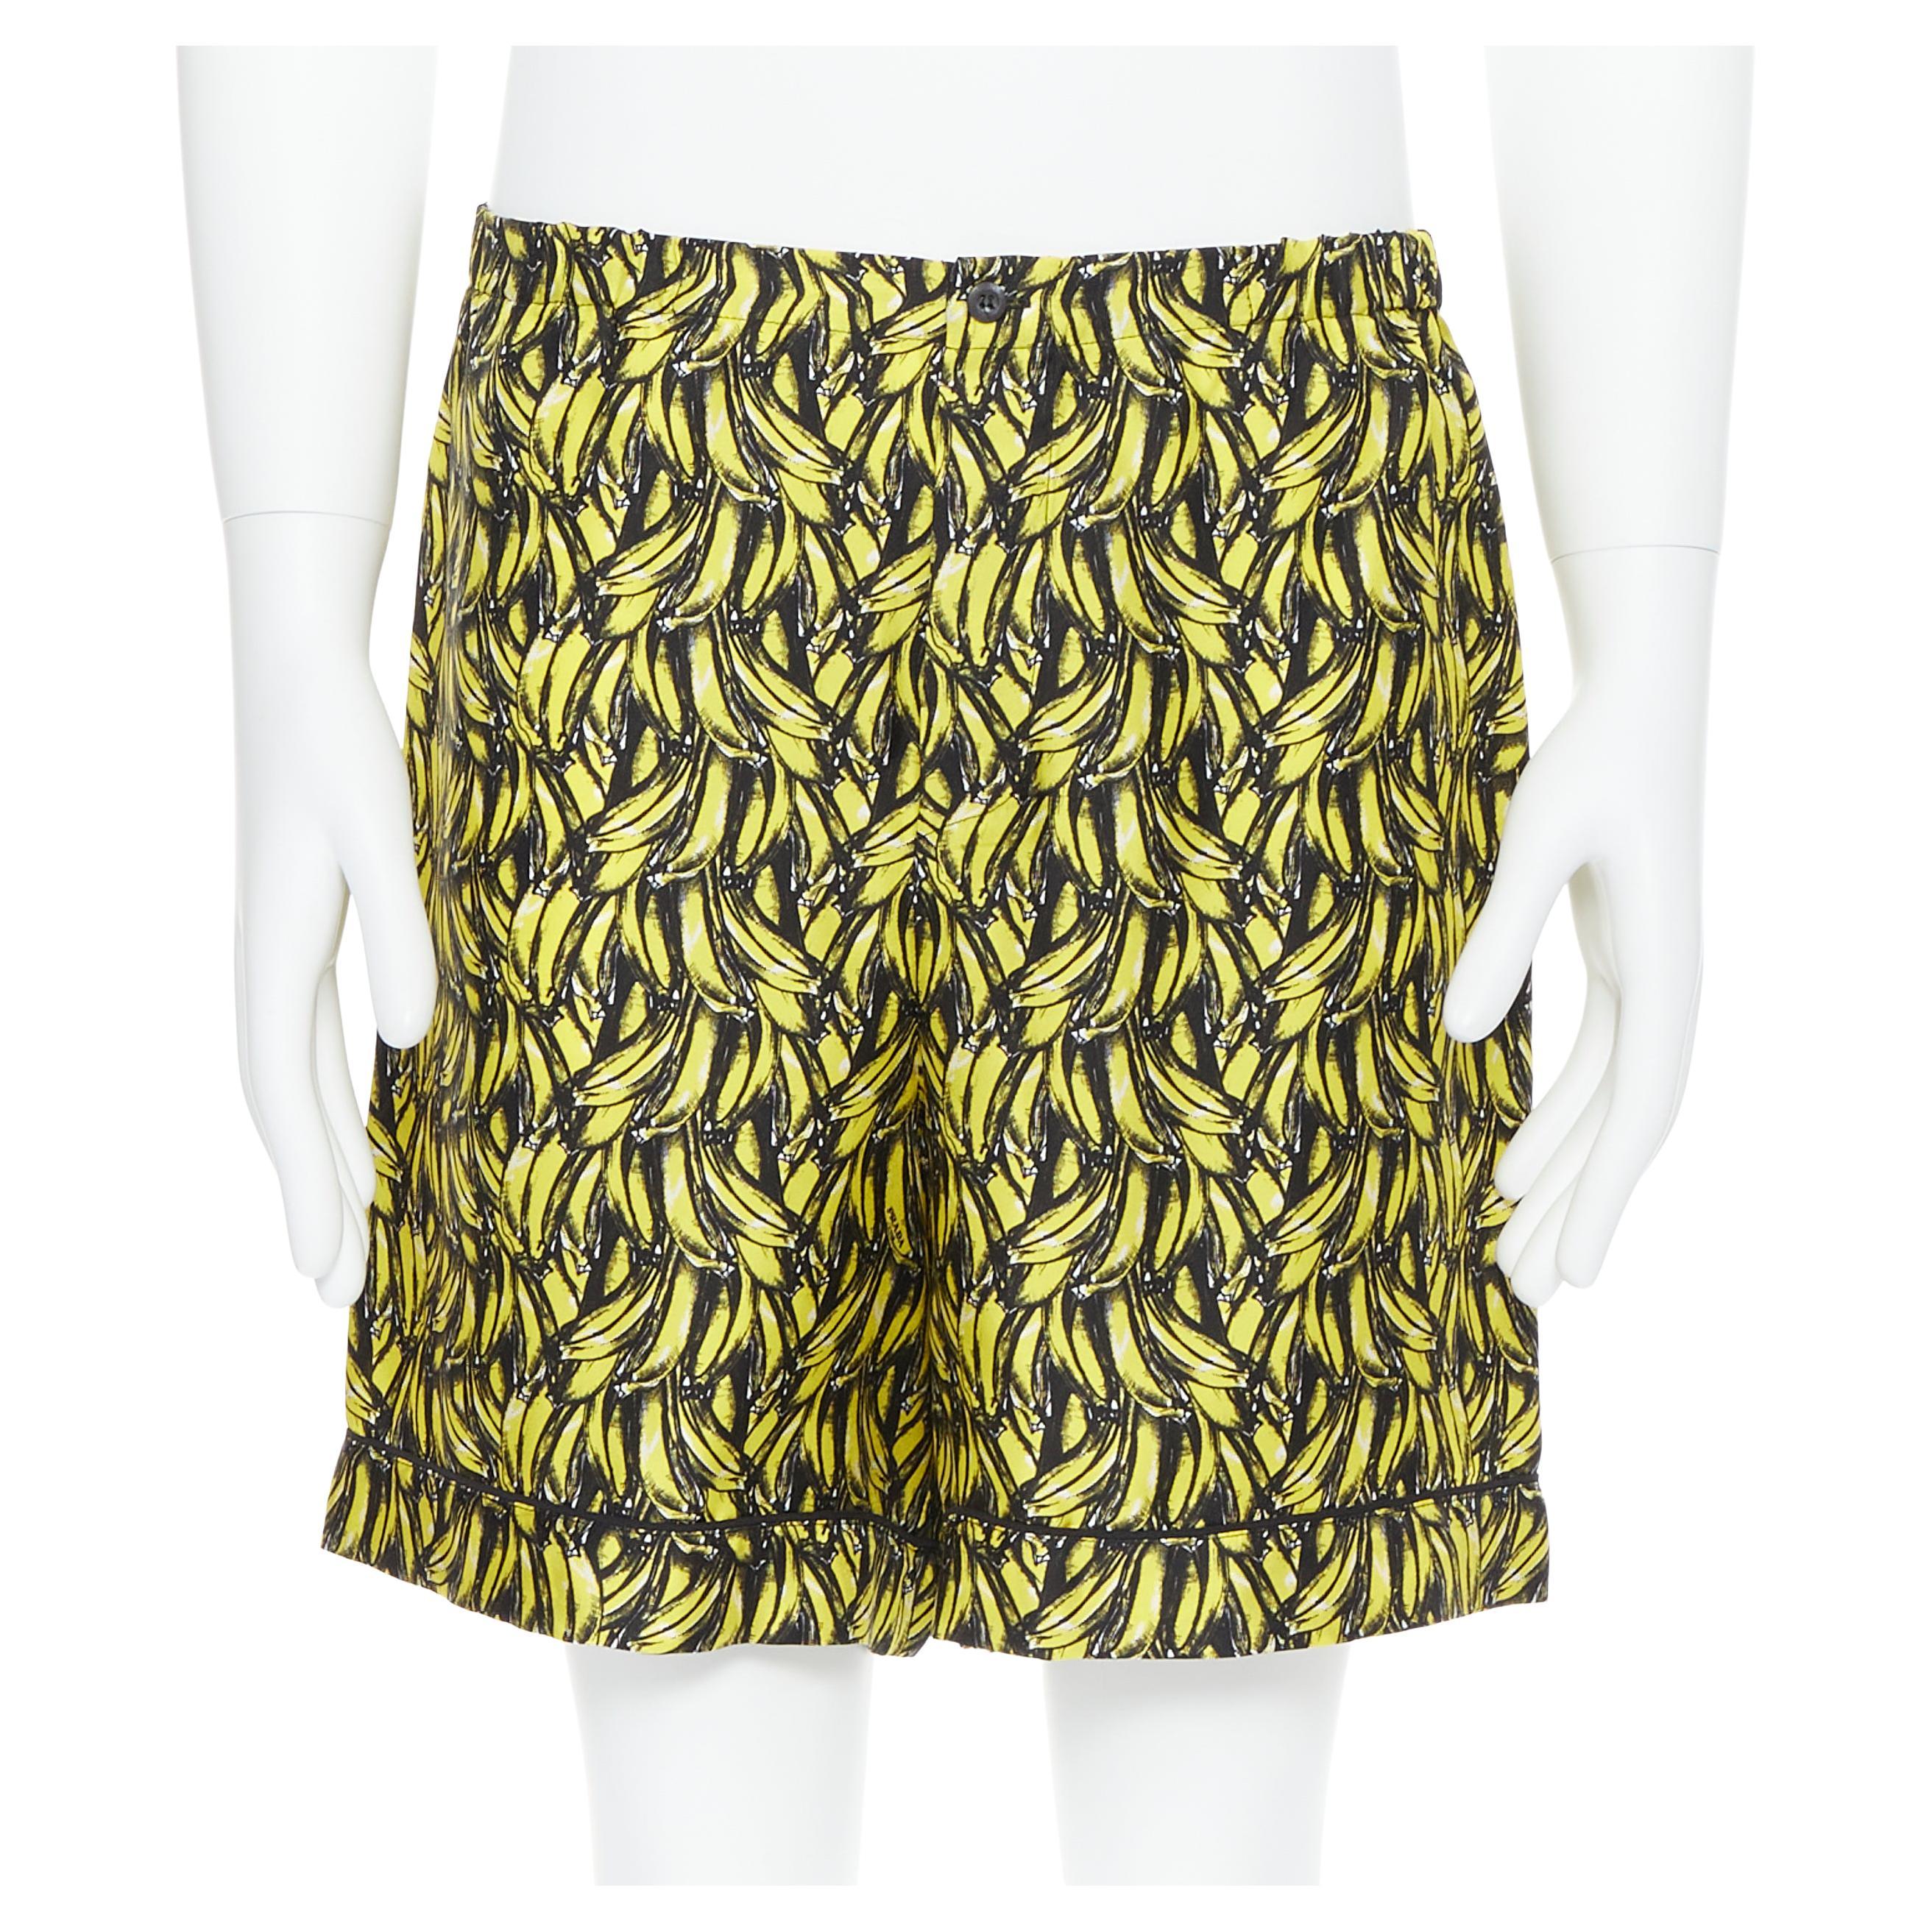 new PRADA iconic banana print 100% silk elasticated waist boxer shorts S